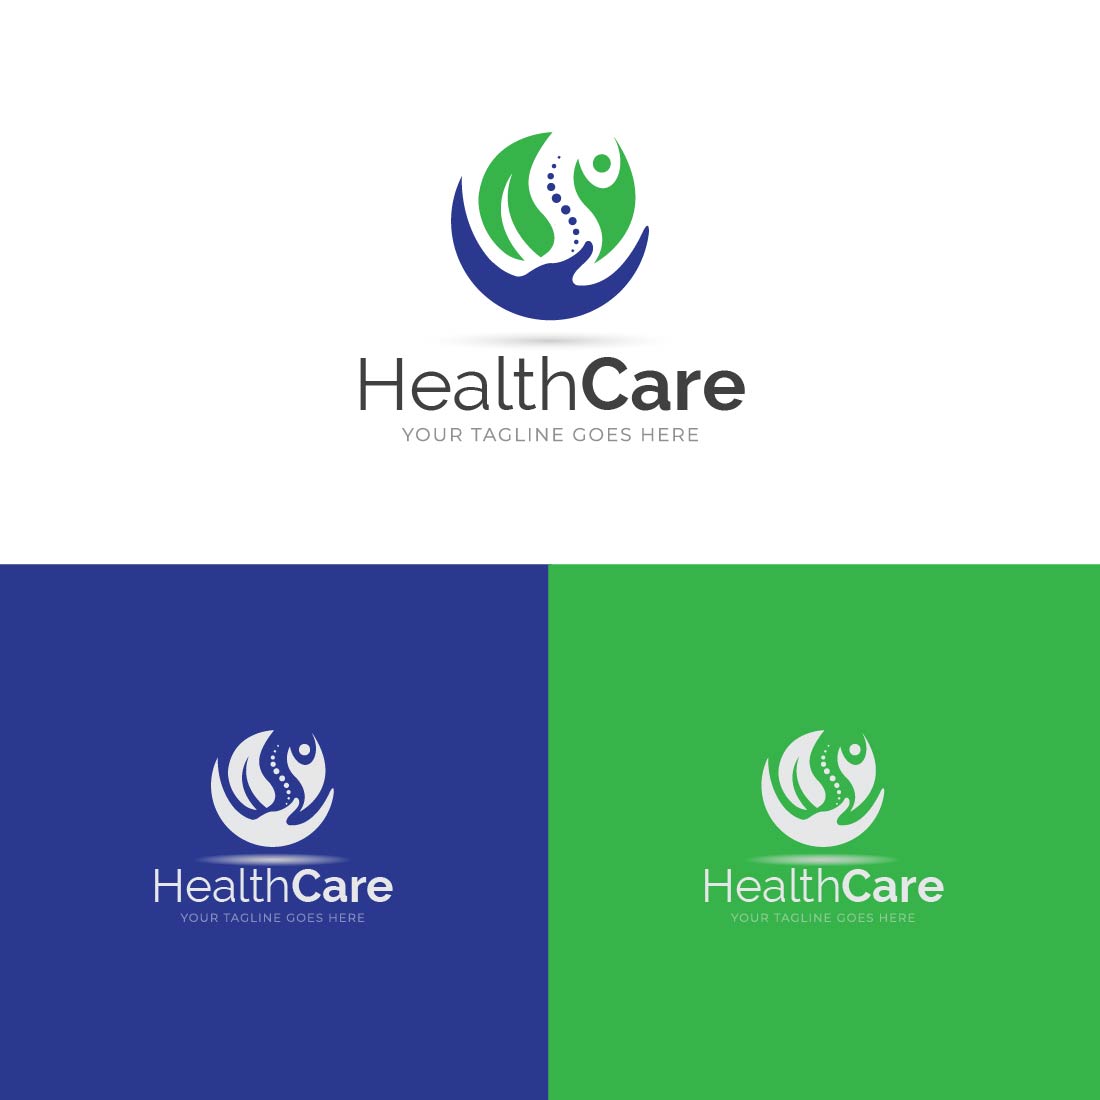 Health care logo design preview image.